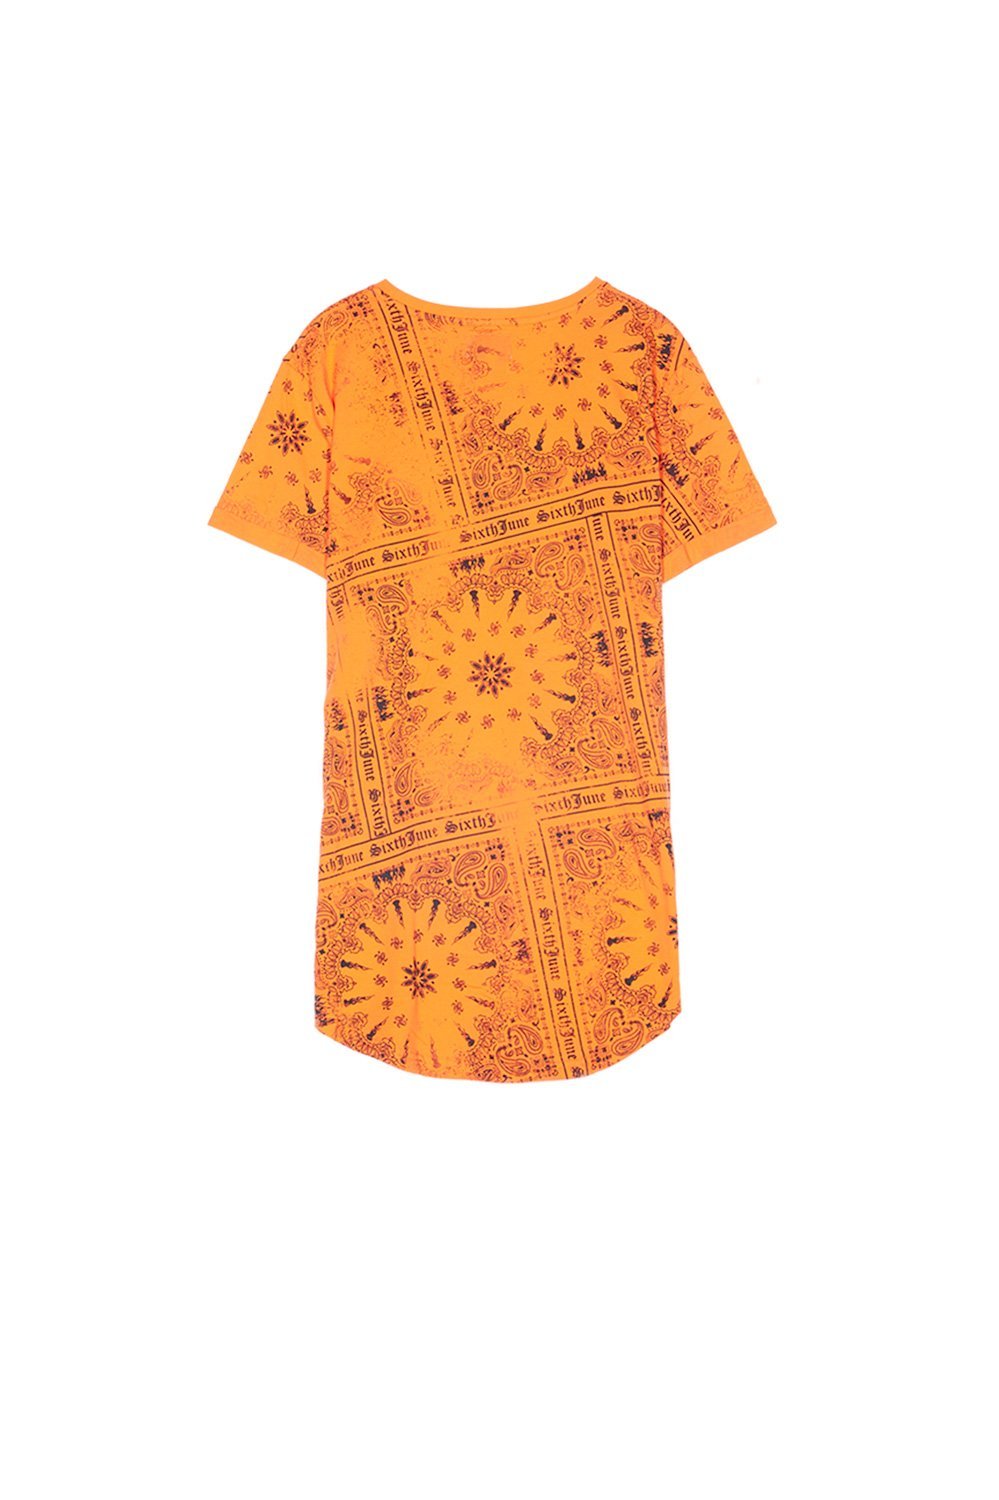 Sixth June - T-shirt all over bandana orange